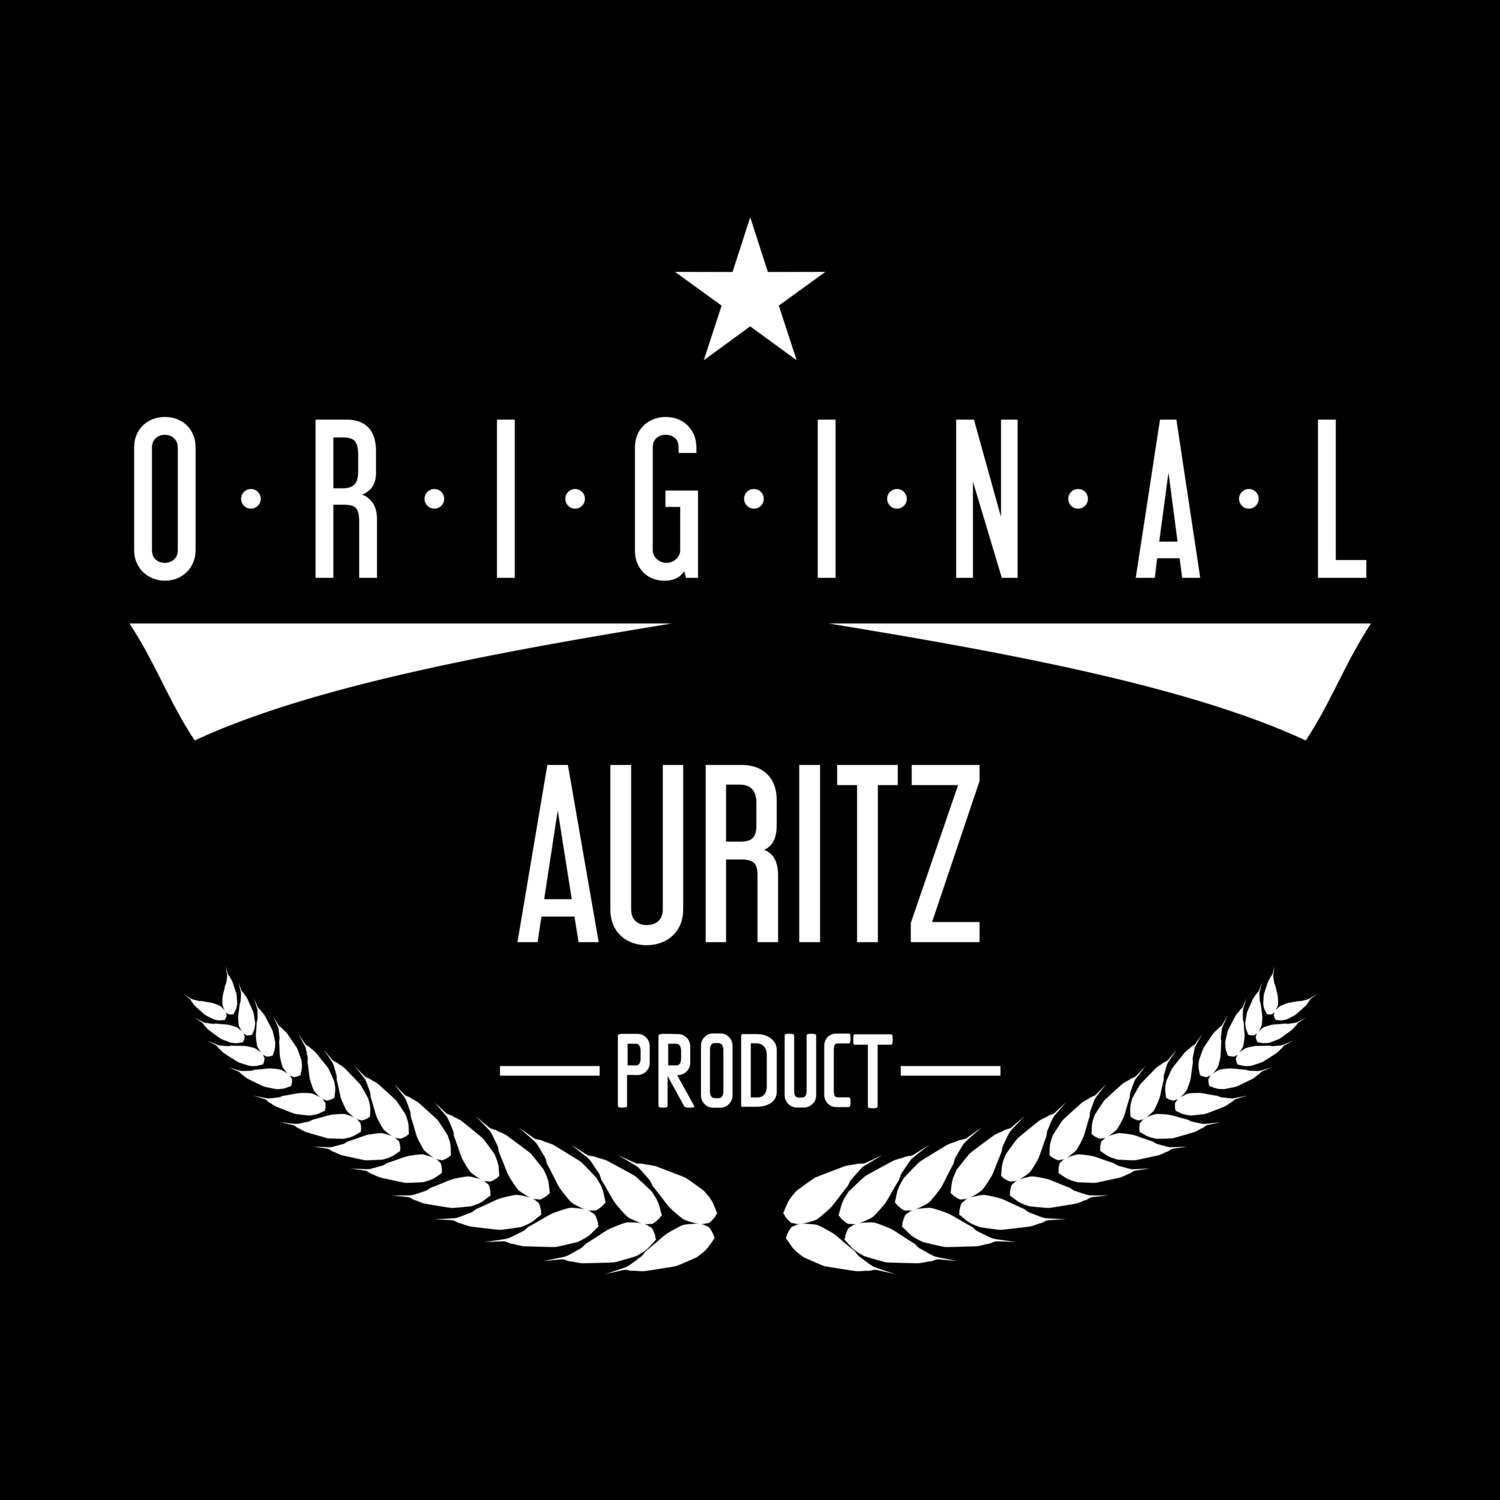 Auritz T-Shirt »Original Product«